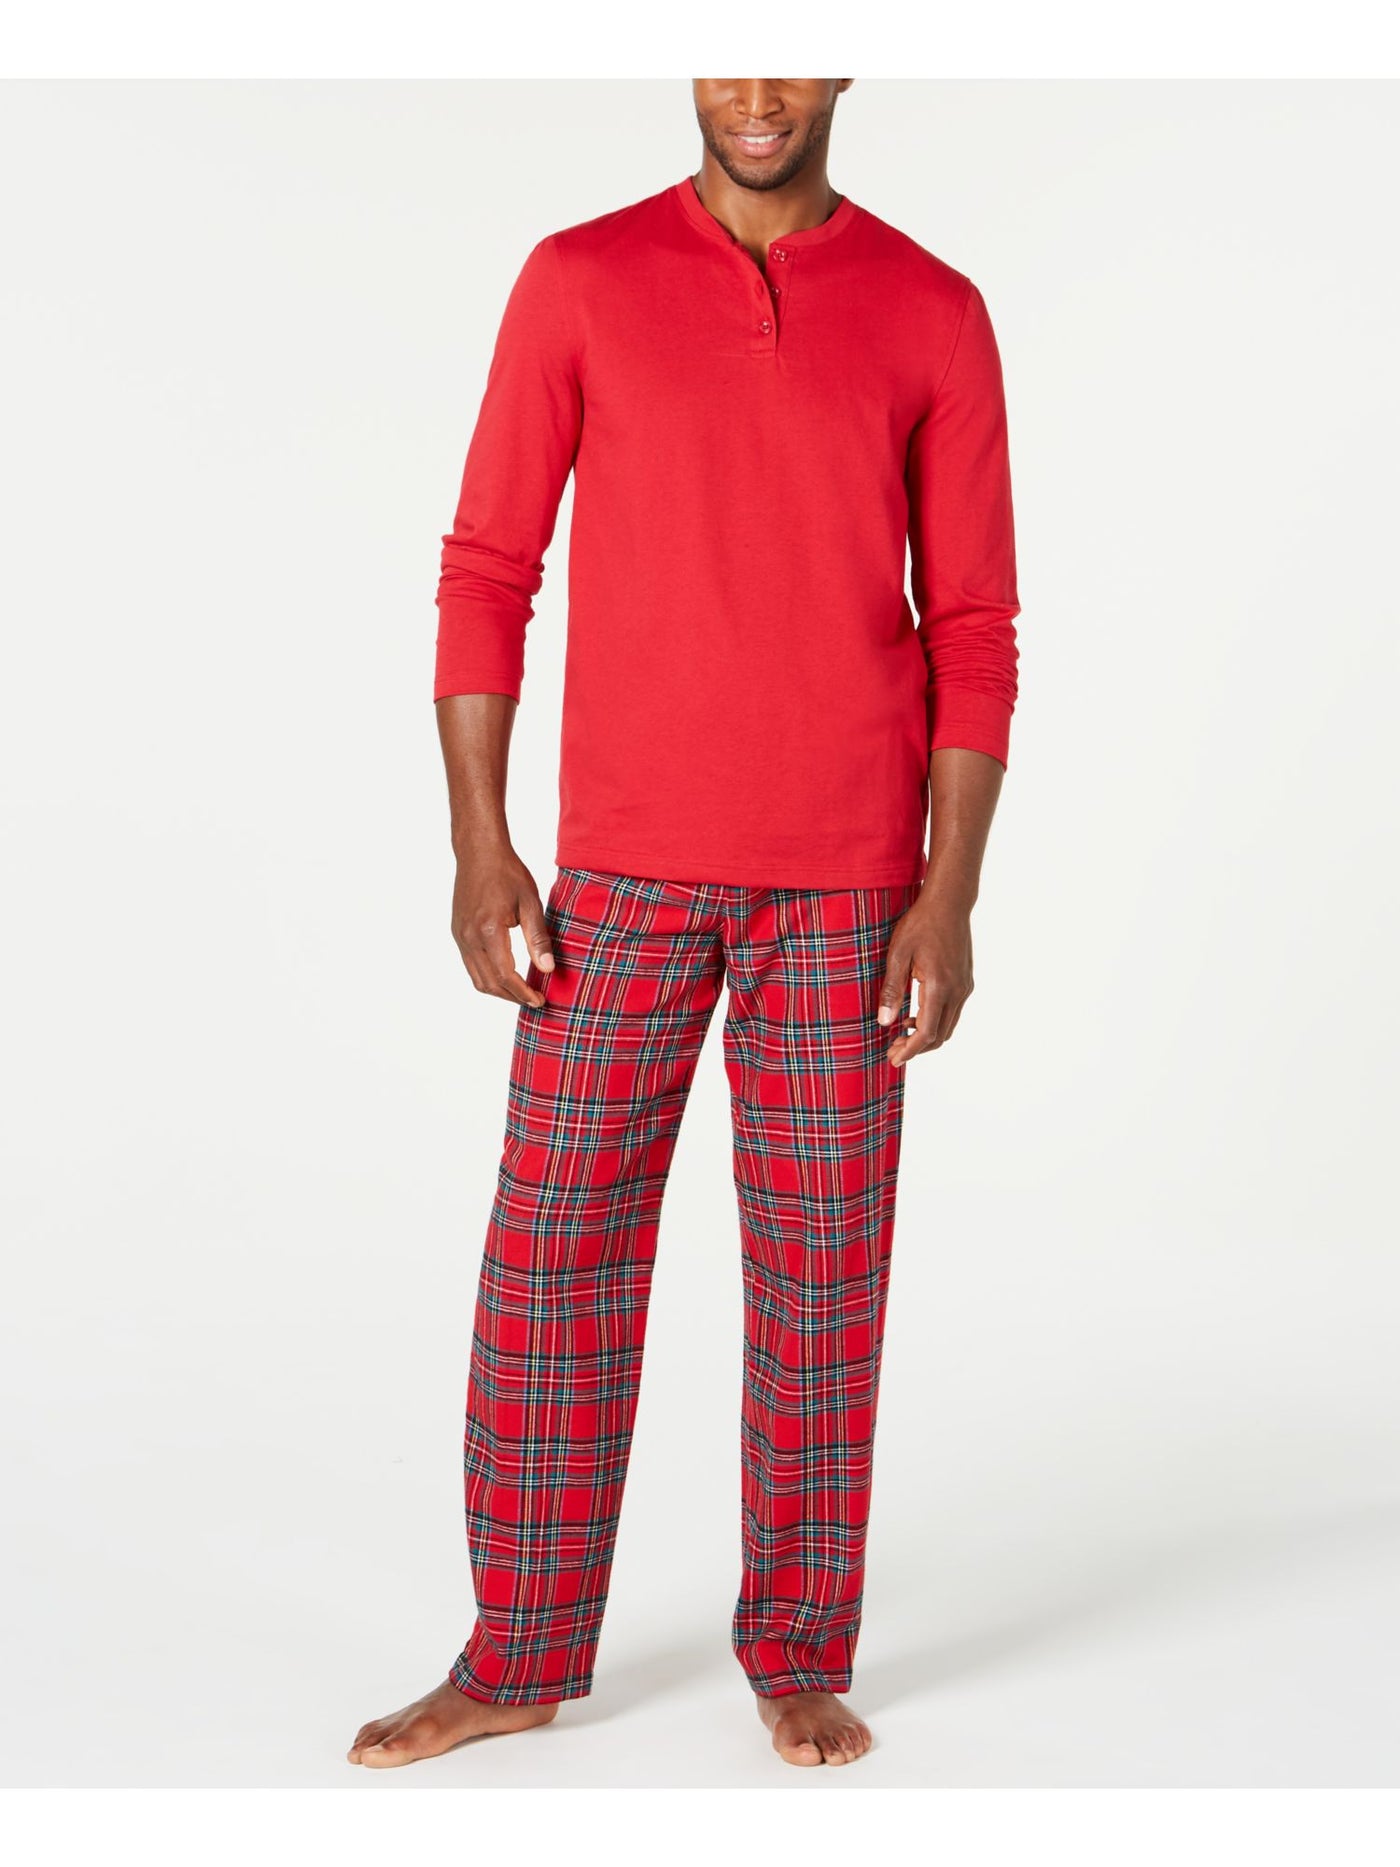 FAMILY PJs Mens Red Elastic Band Long Sleeve T-Shirt Top Straight leg Pants Pajamas M